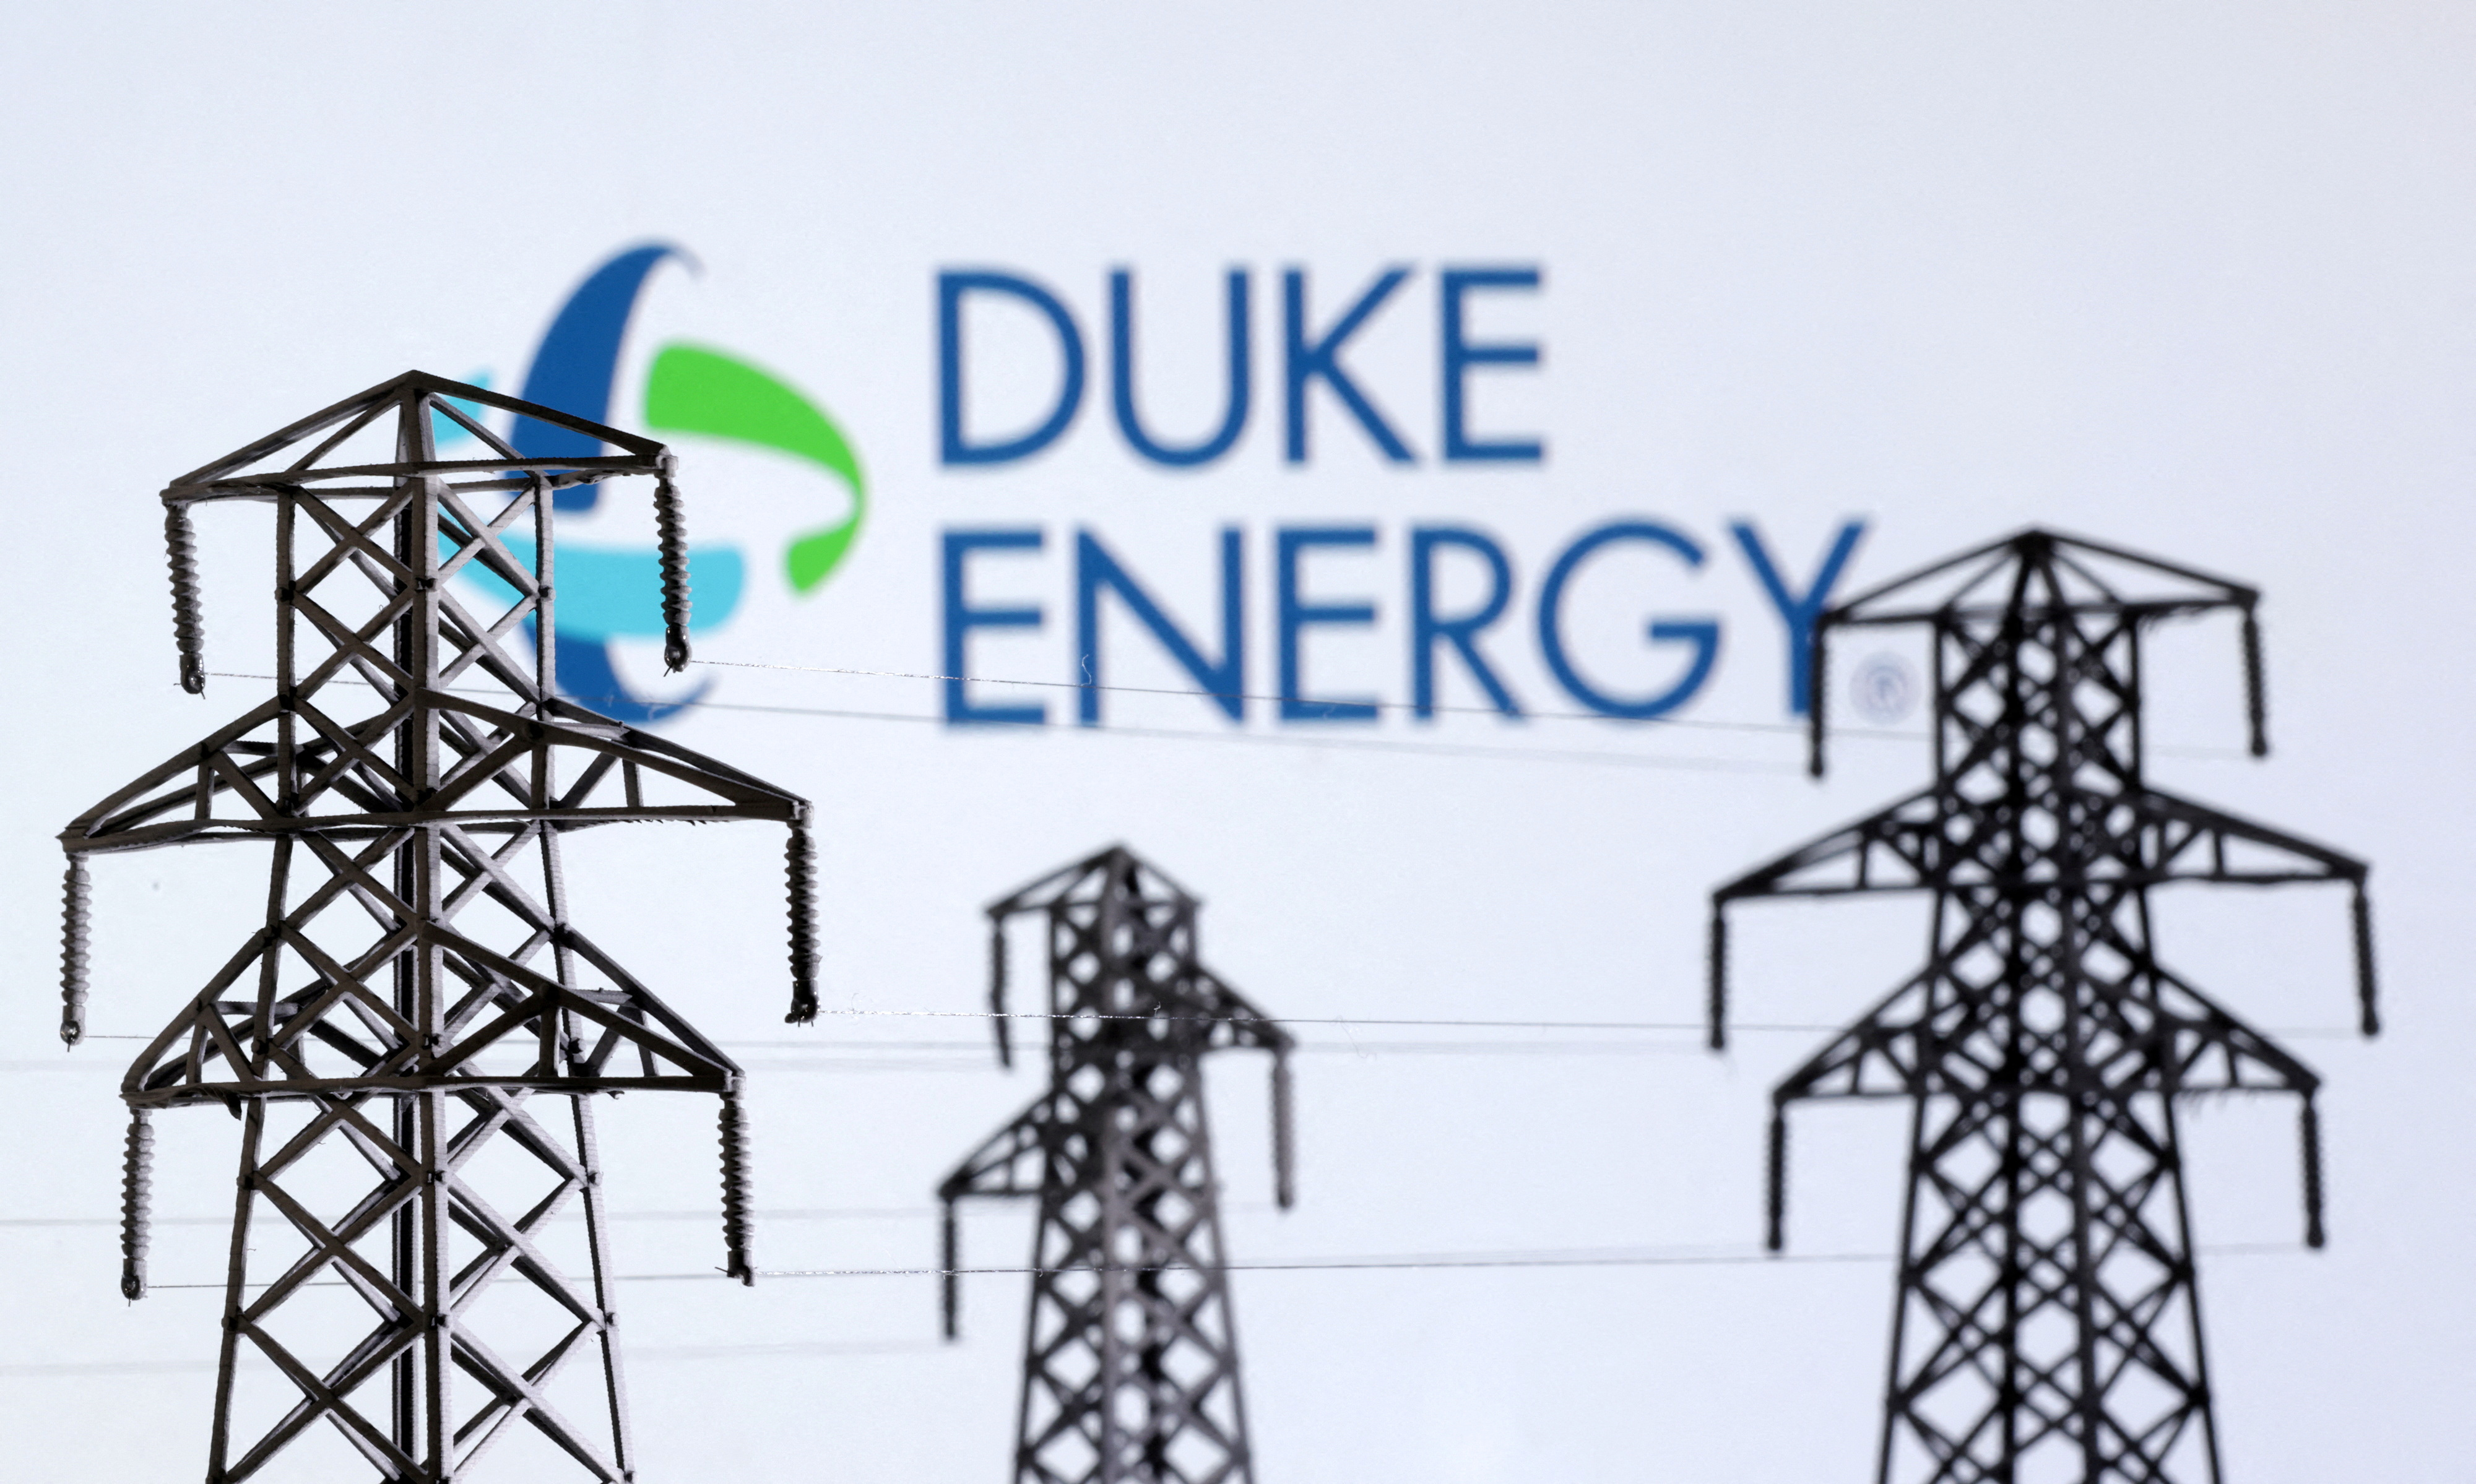 Illustration shows Electric power transmission pylon miniatures and Duke Energy logo